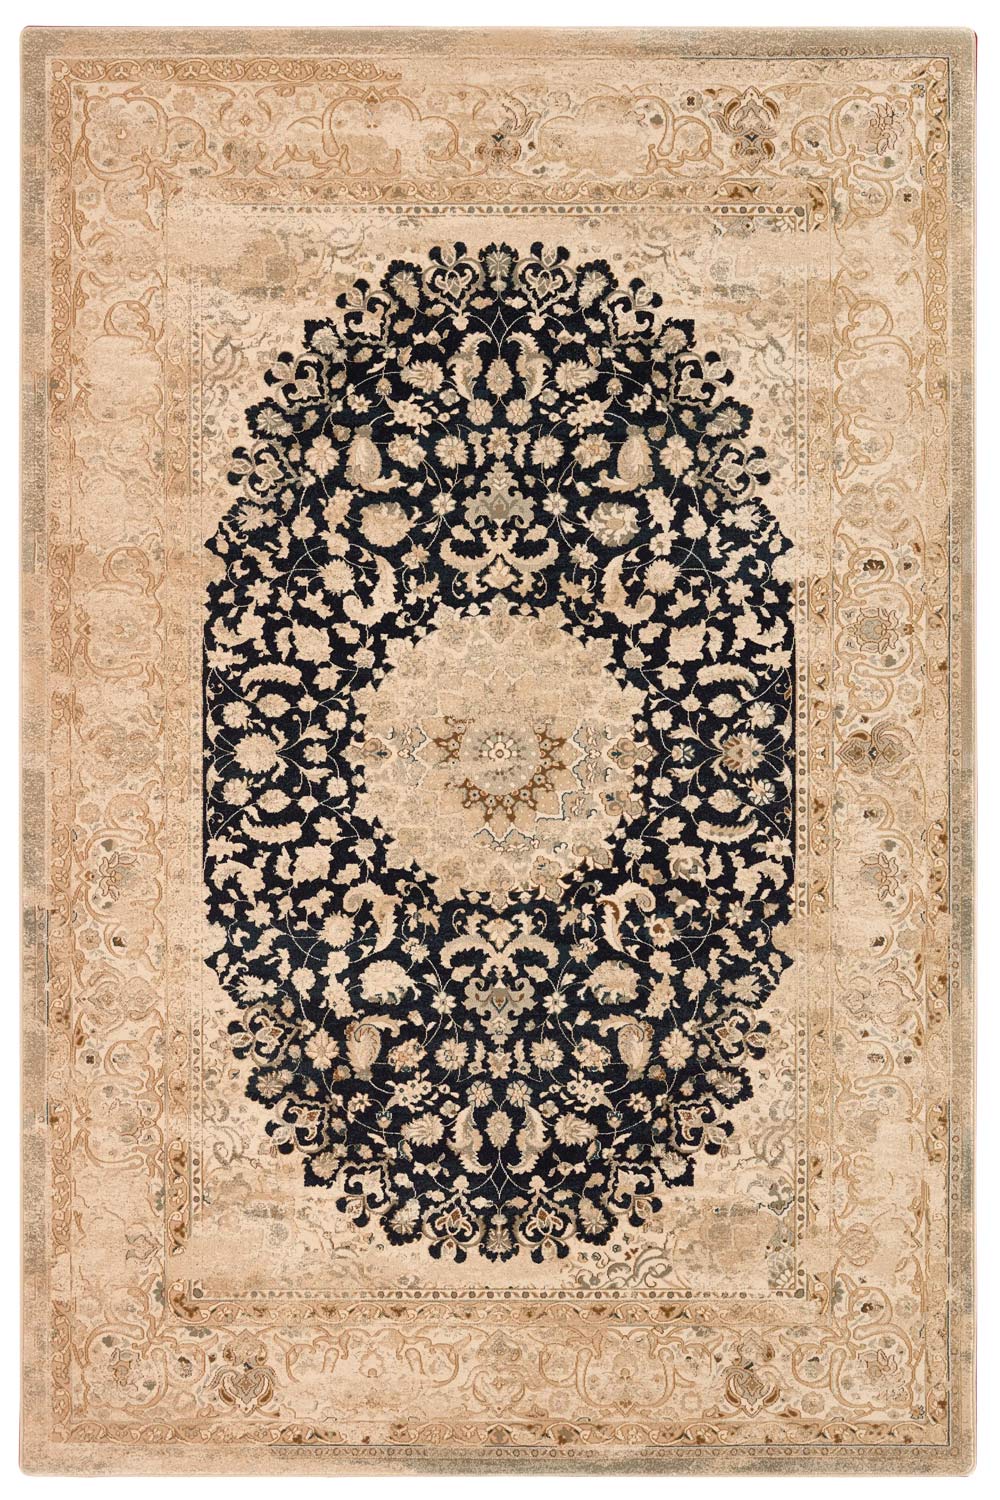 Kusový koberec SUPERIOR Latica Rubin 2470 cC4